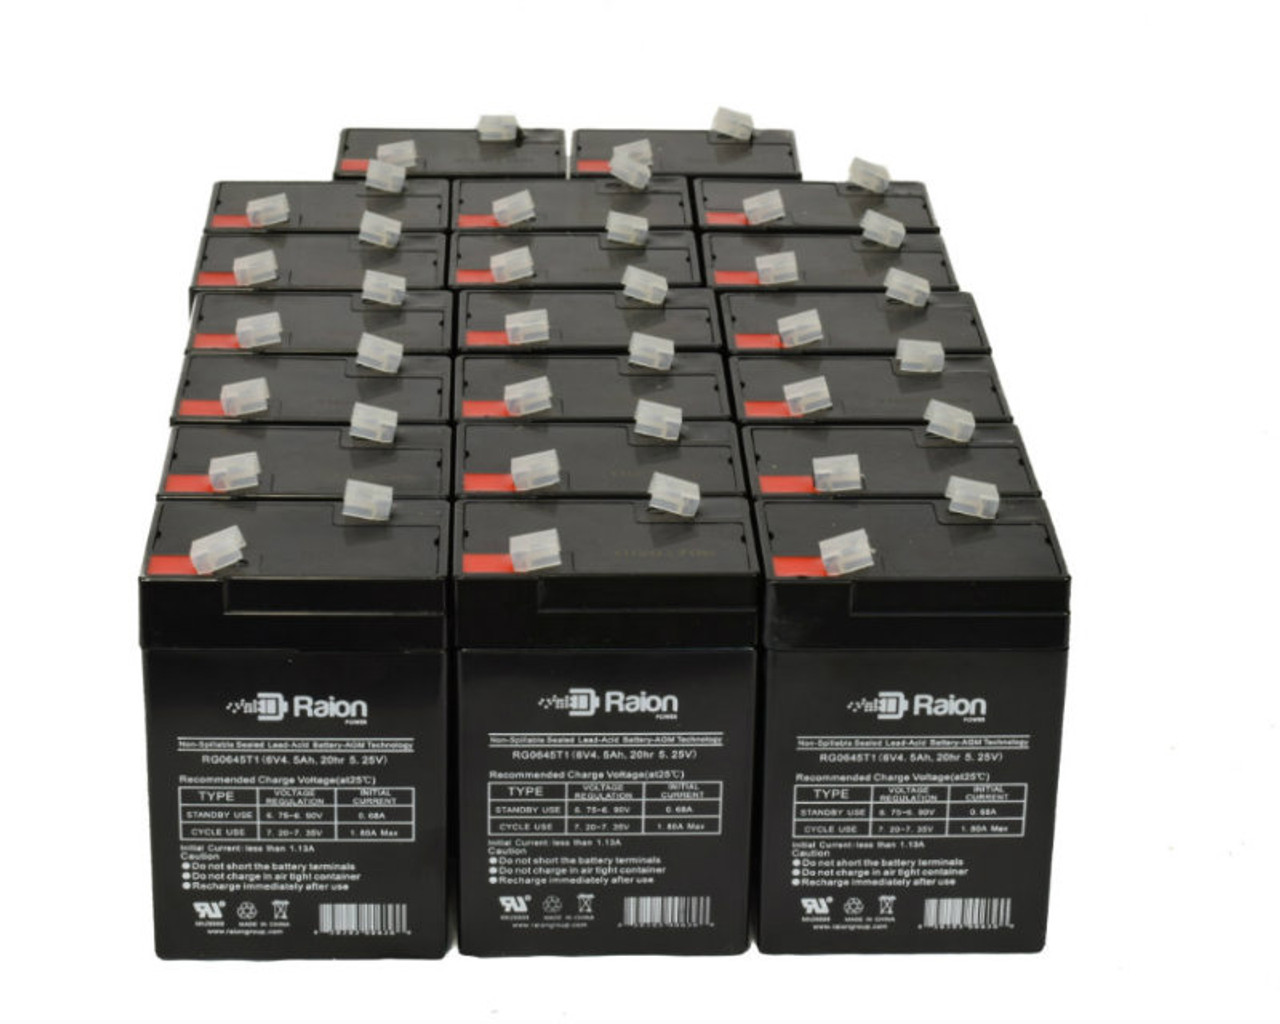 Raion Power 6 Volt 4.5Ah RG0645T1 Replacement Battery for Q-Batteries 6LS-4.5 - 20 Pack